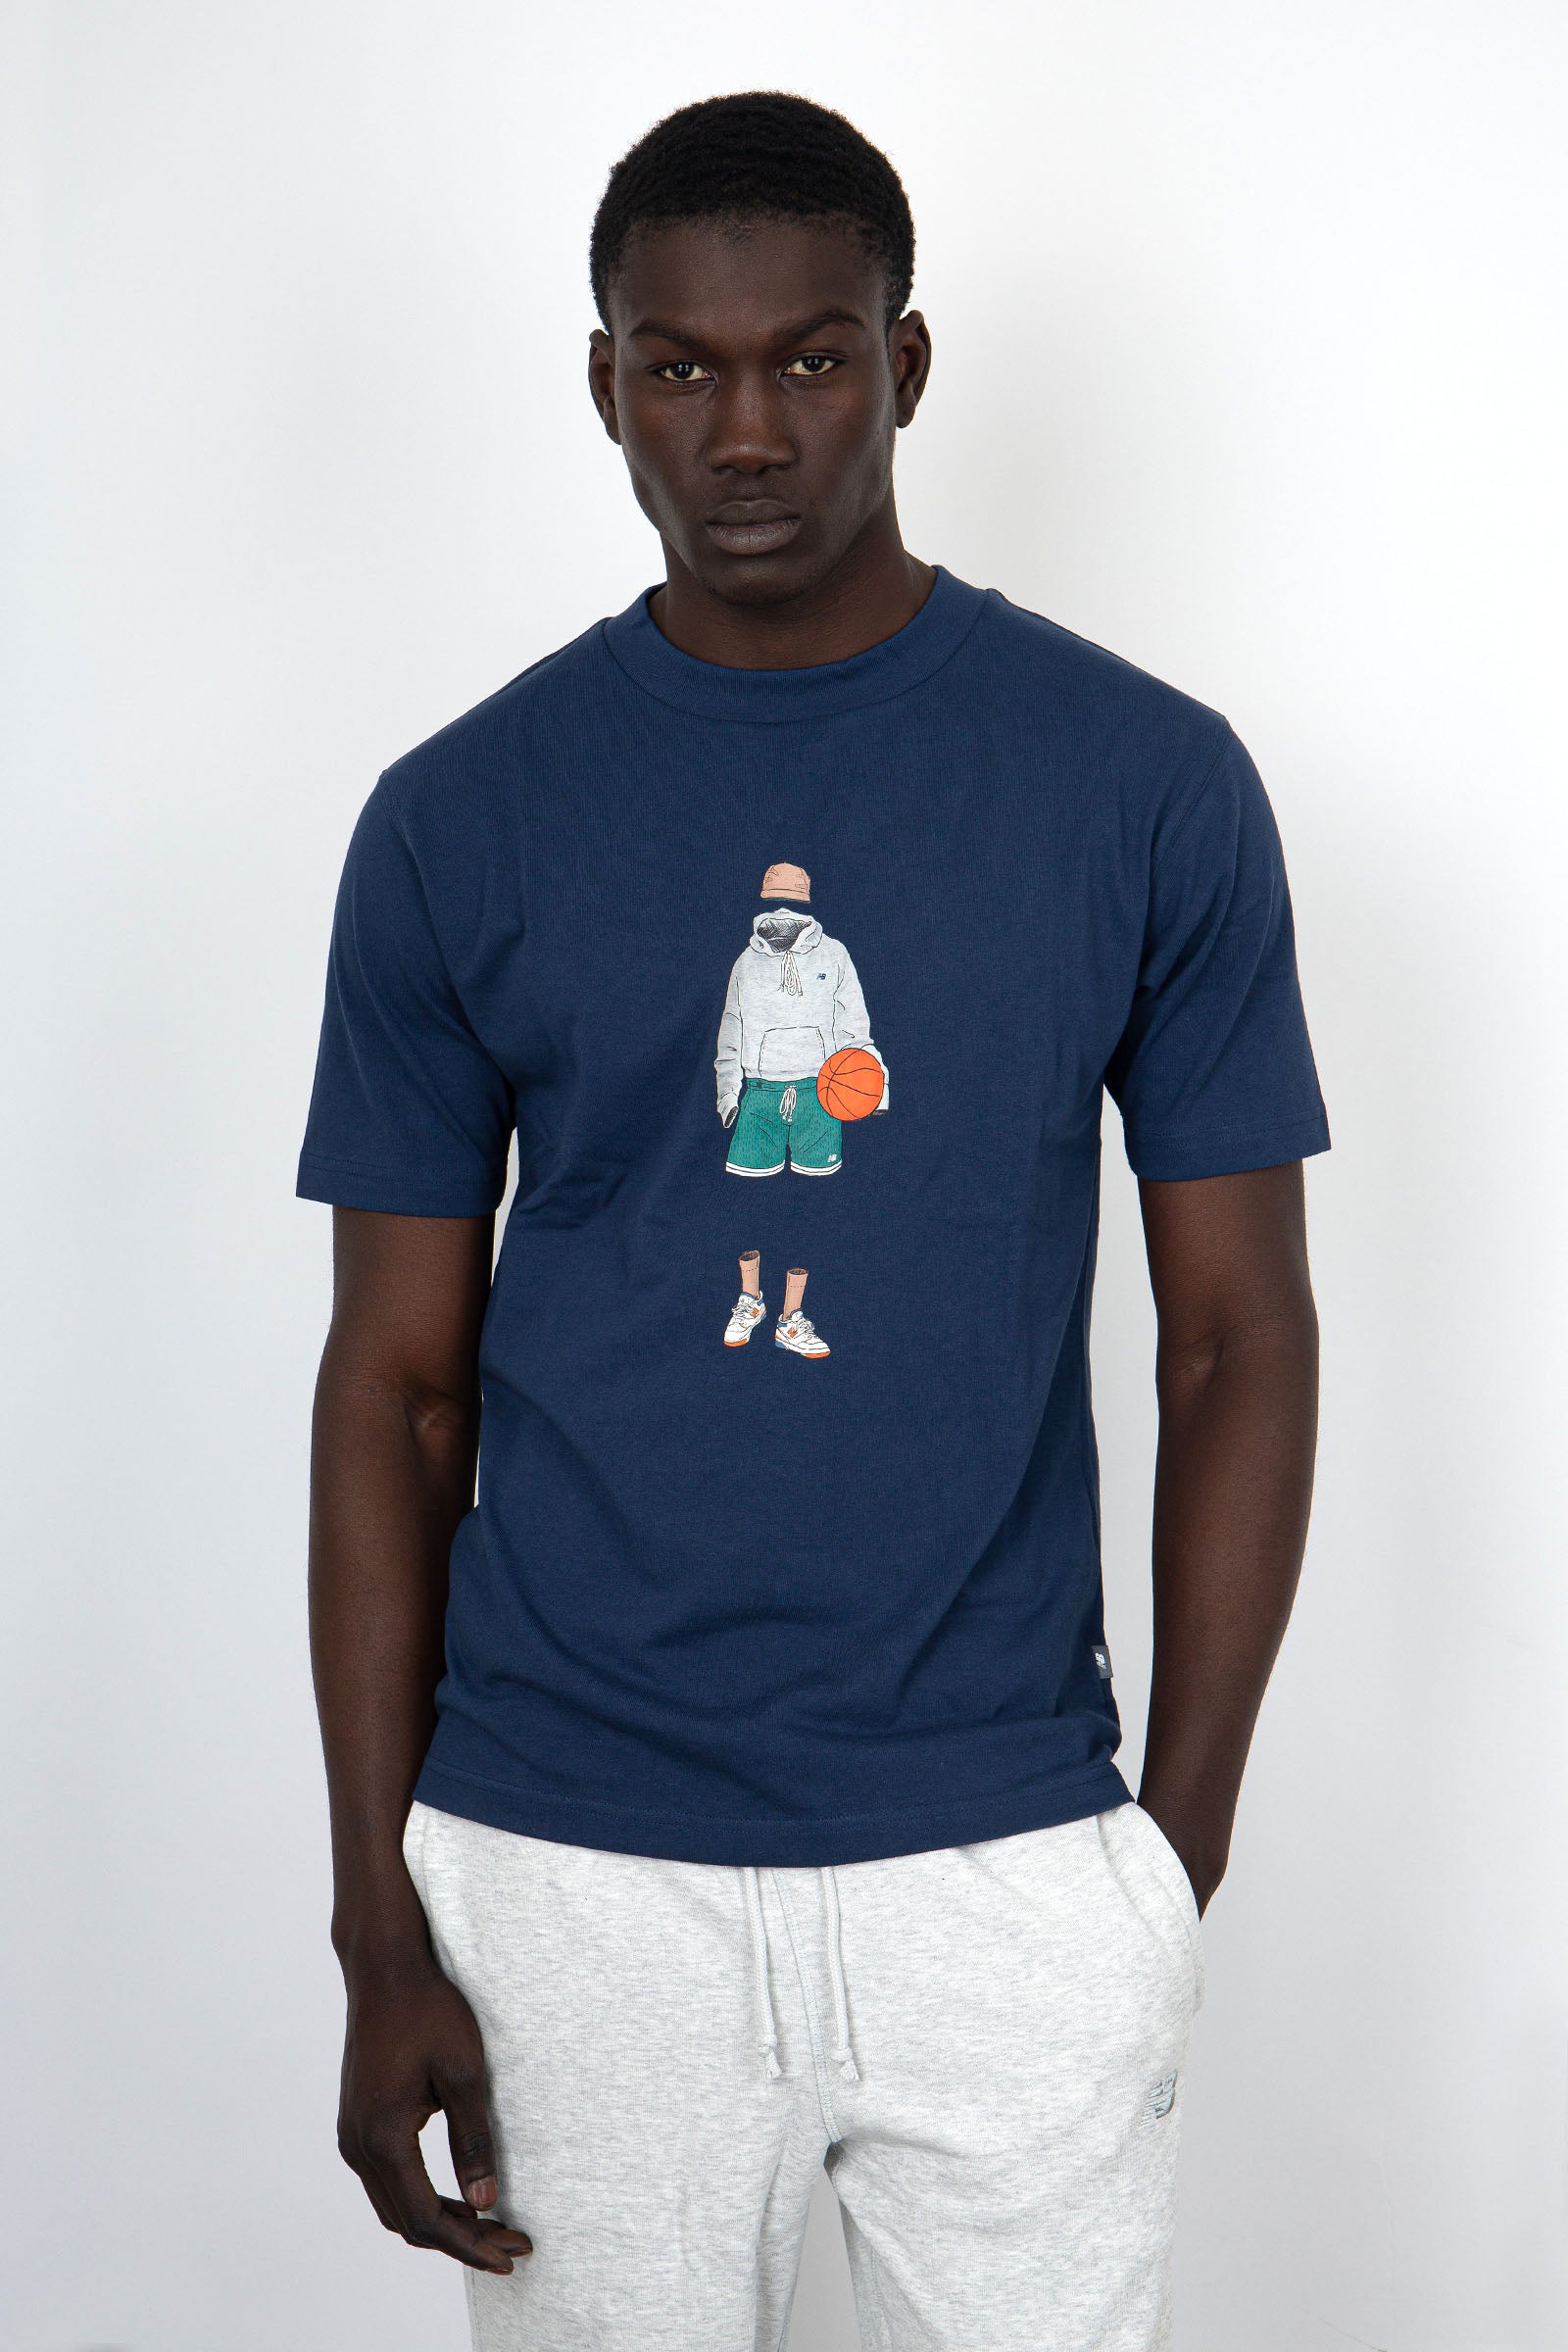 New Balance T-shirt NB Athletics Basketball Style Cotton Blue - 5